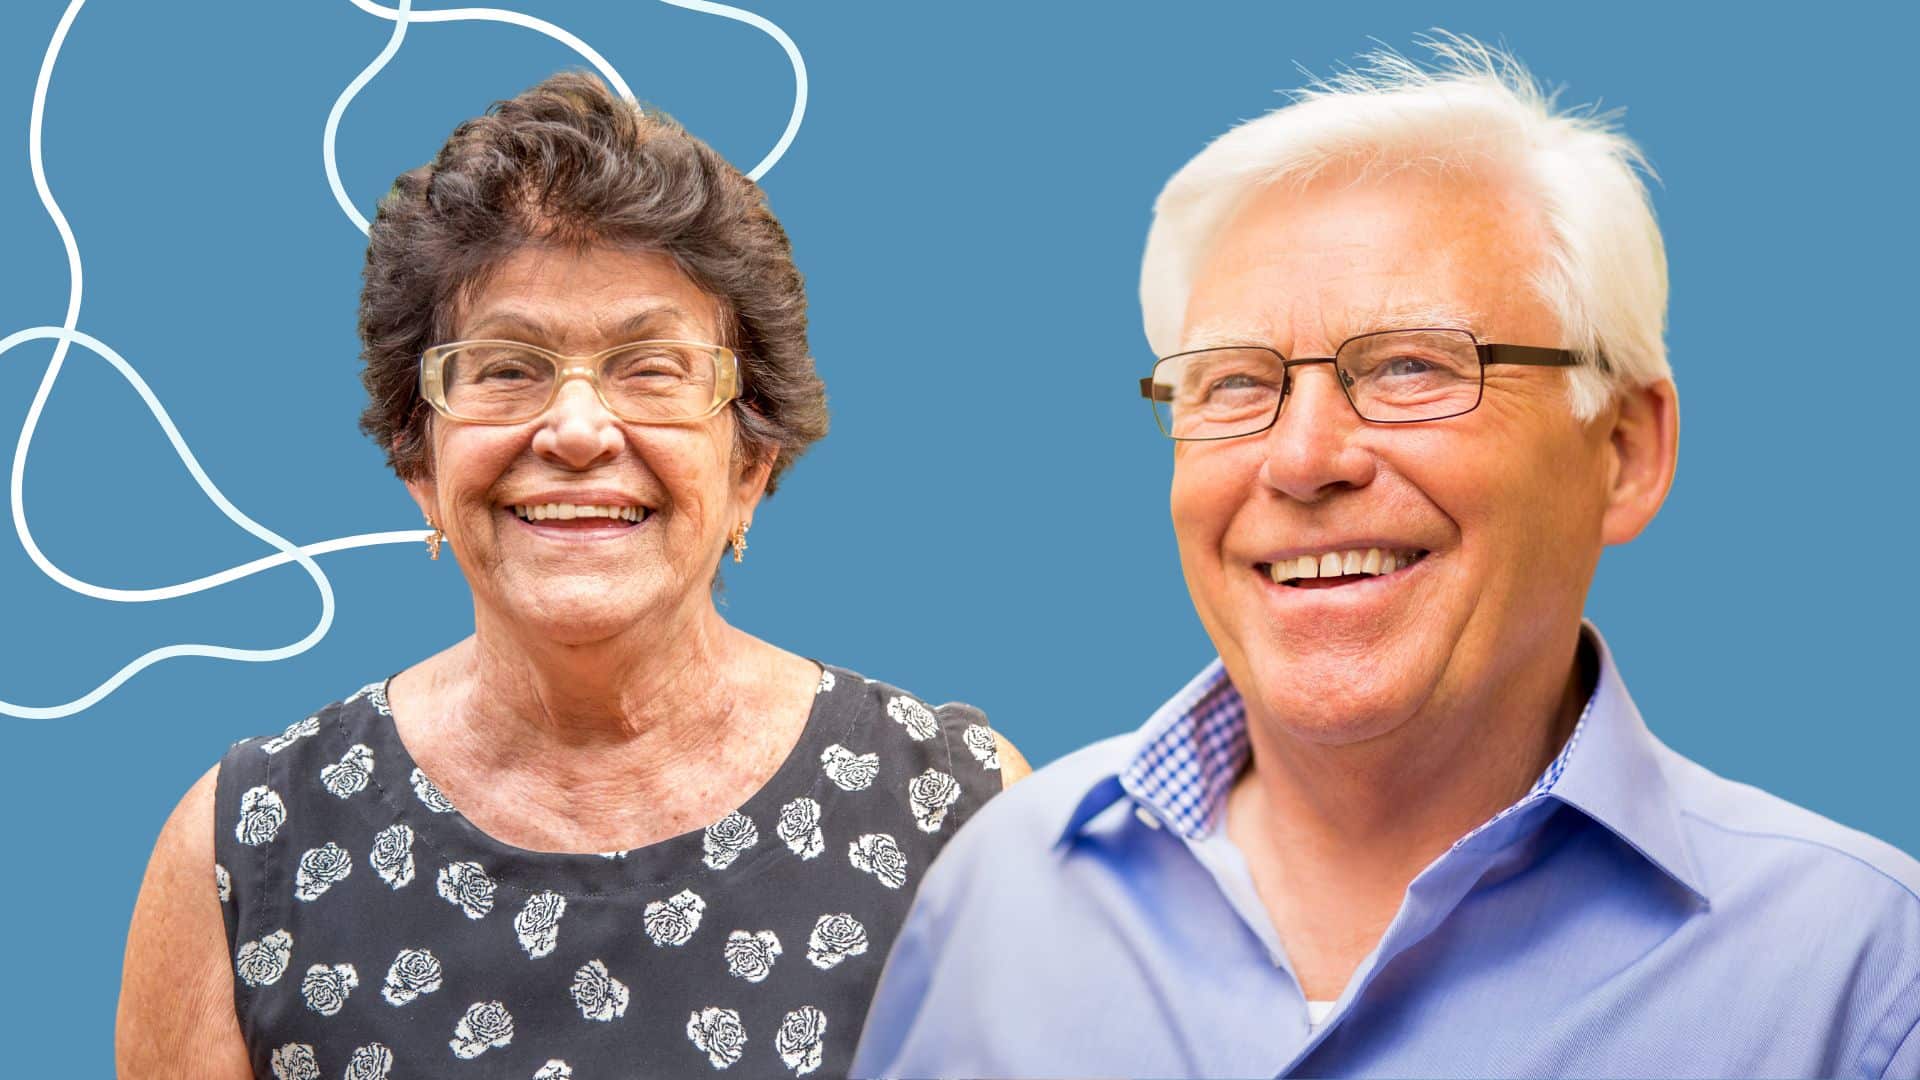 Older people in glasses smiling